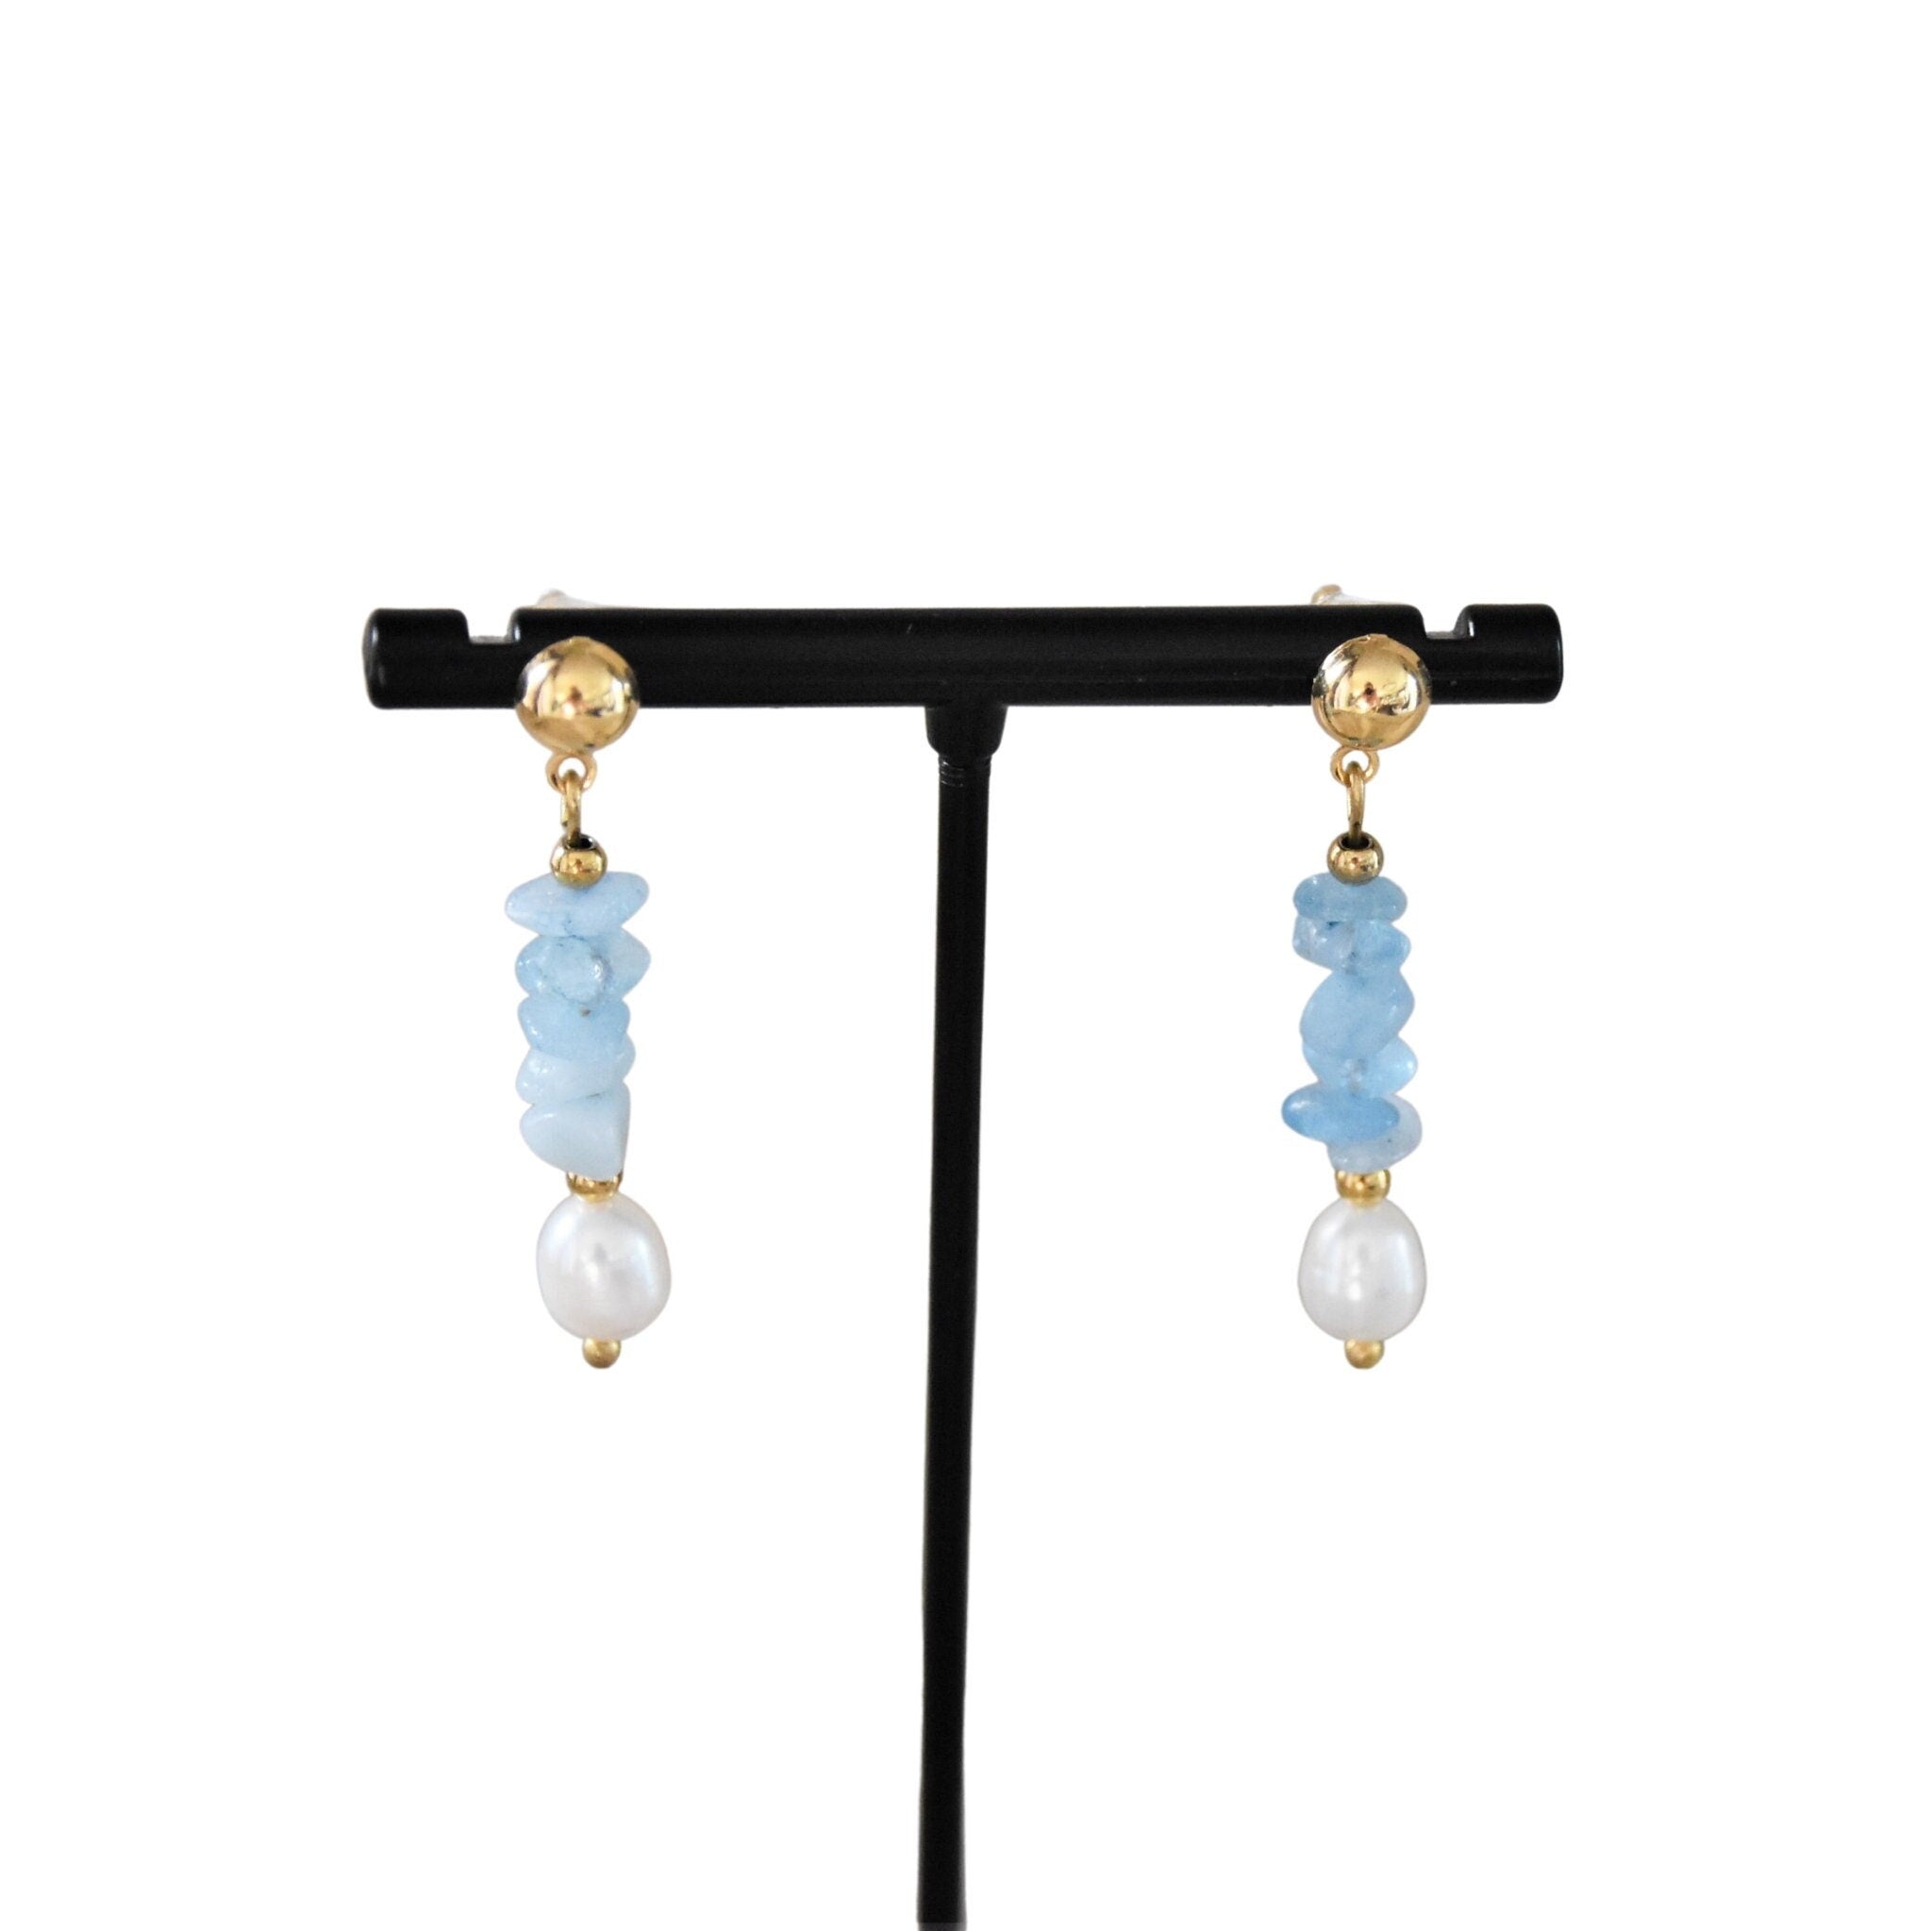 Freshwater pearls and aquamarine earrings